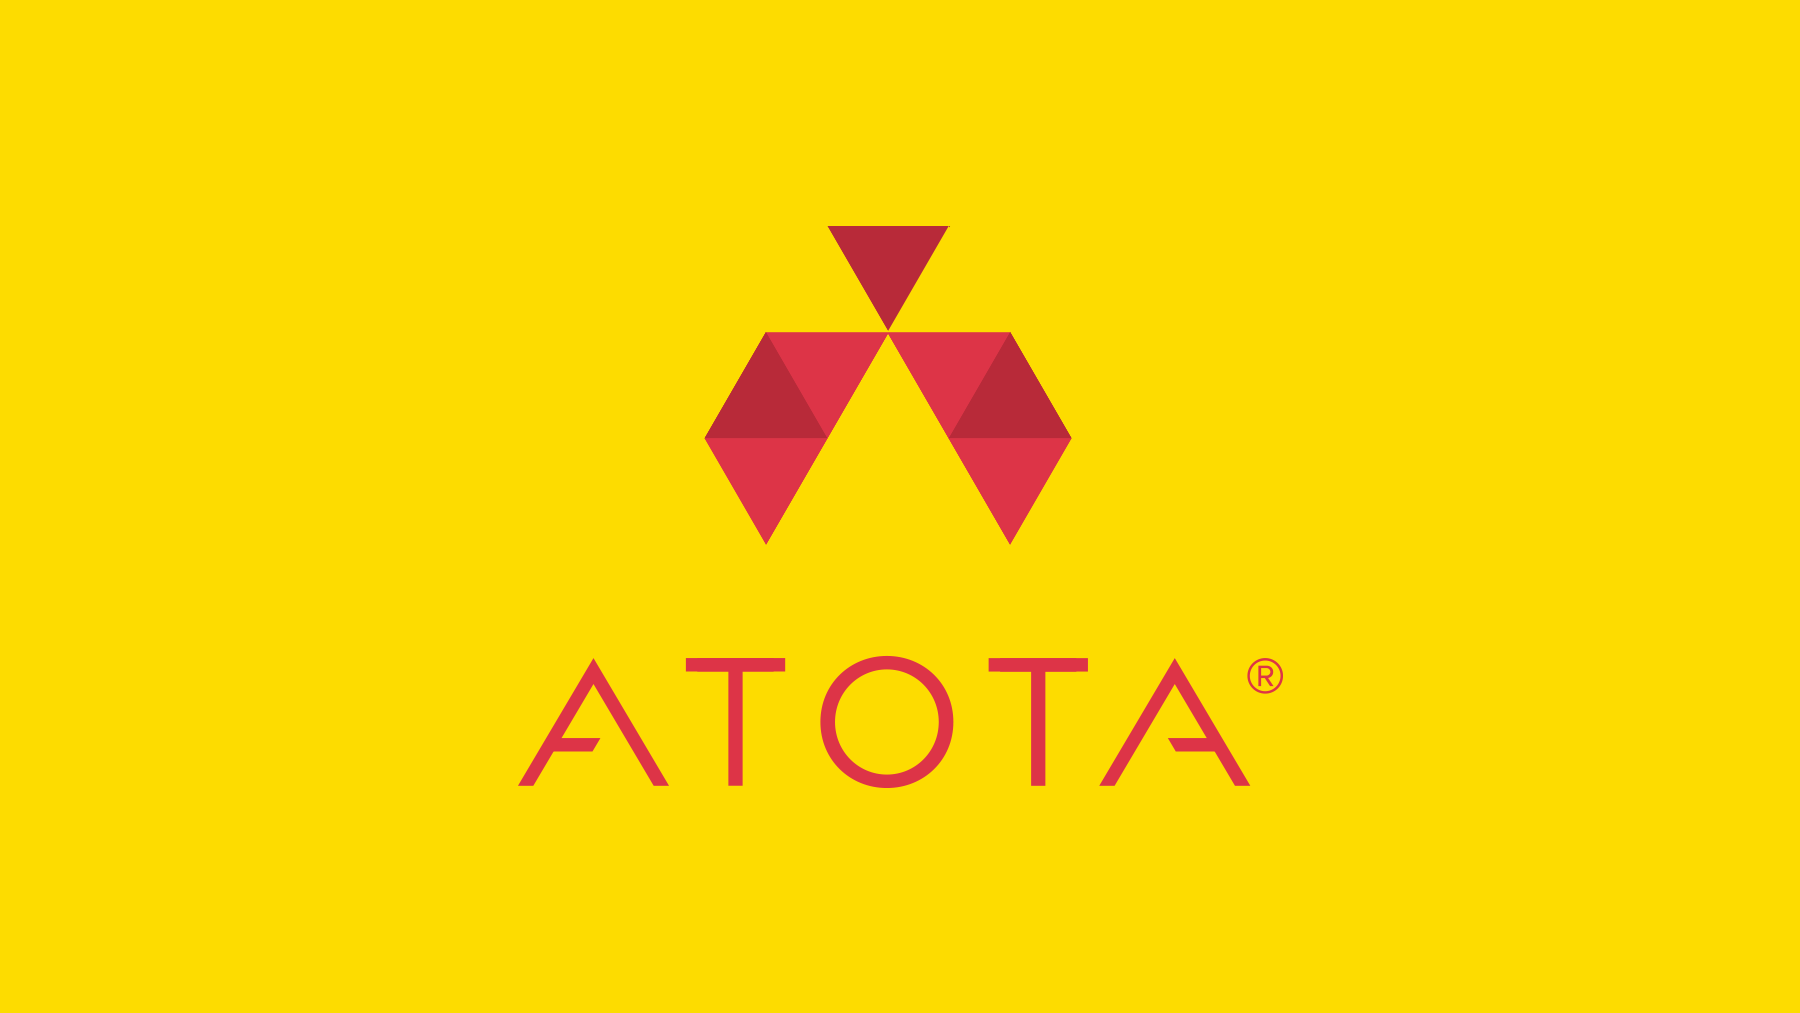 Geometric brand identity design for Atota Communications.